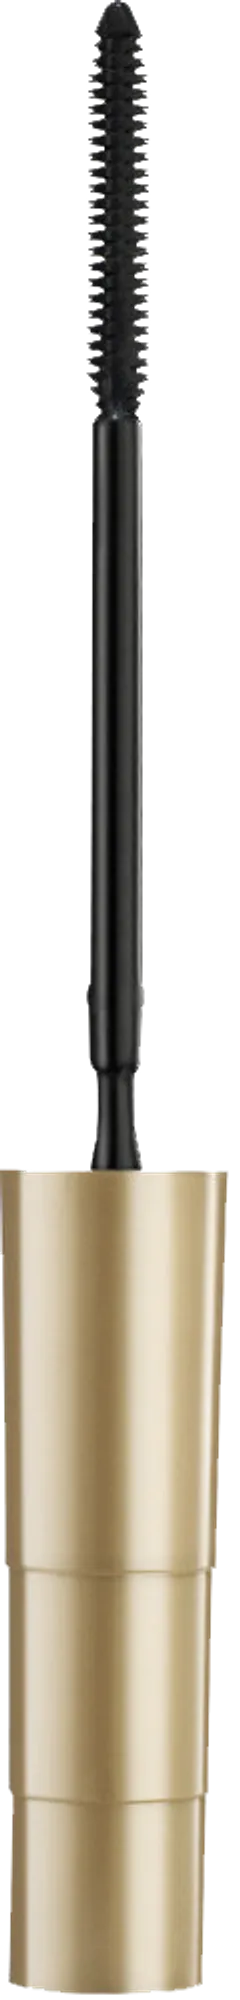 L'Oréal Paris Telescopic Maskara Black/Noir ultrapidentävä ripsiväri 8ml - 2